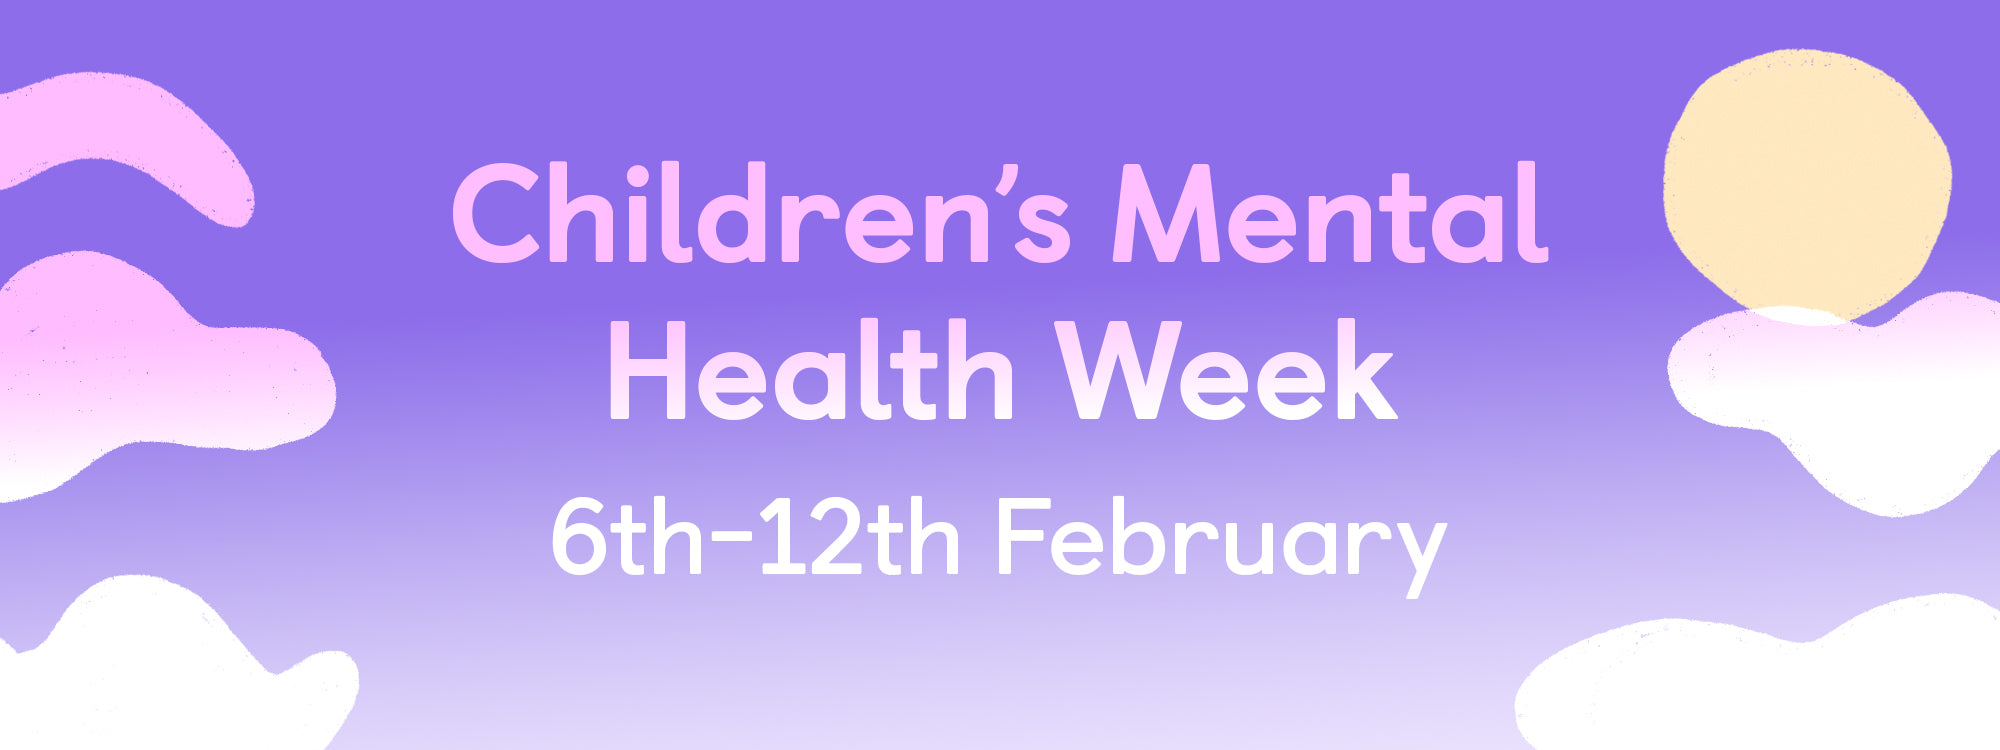 Children's Mental Health Week with Moshi